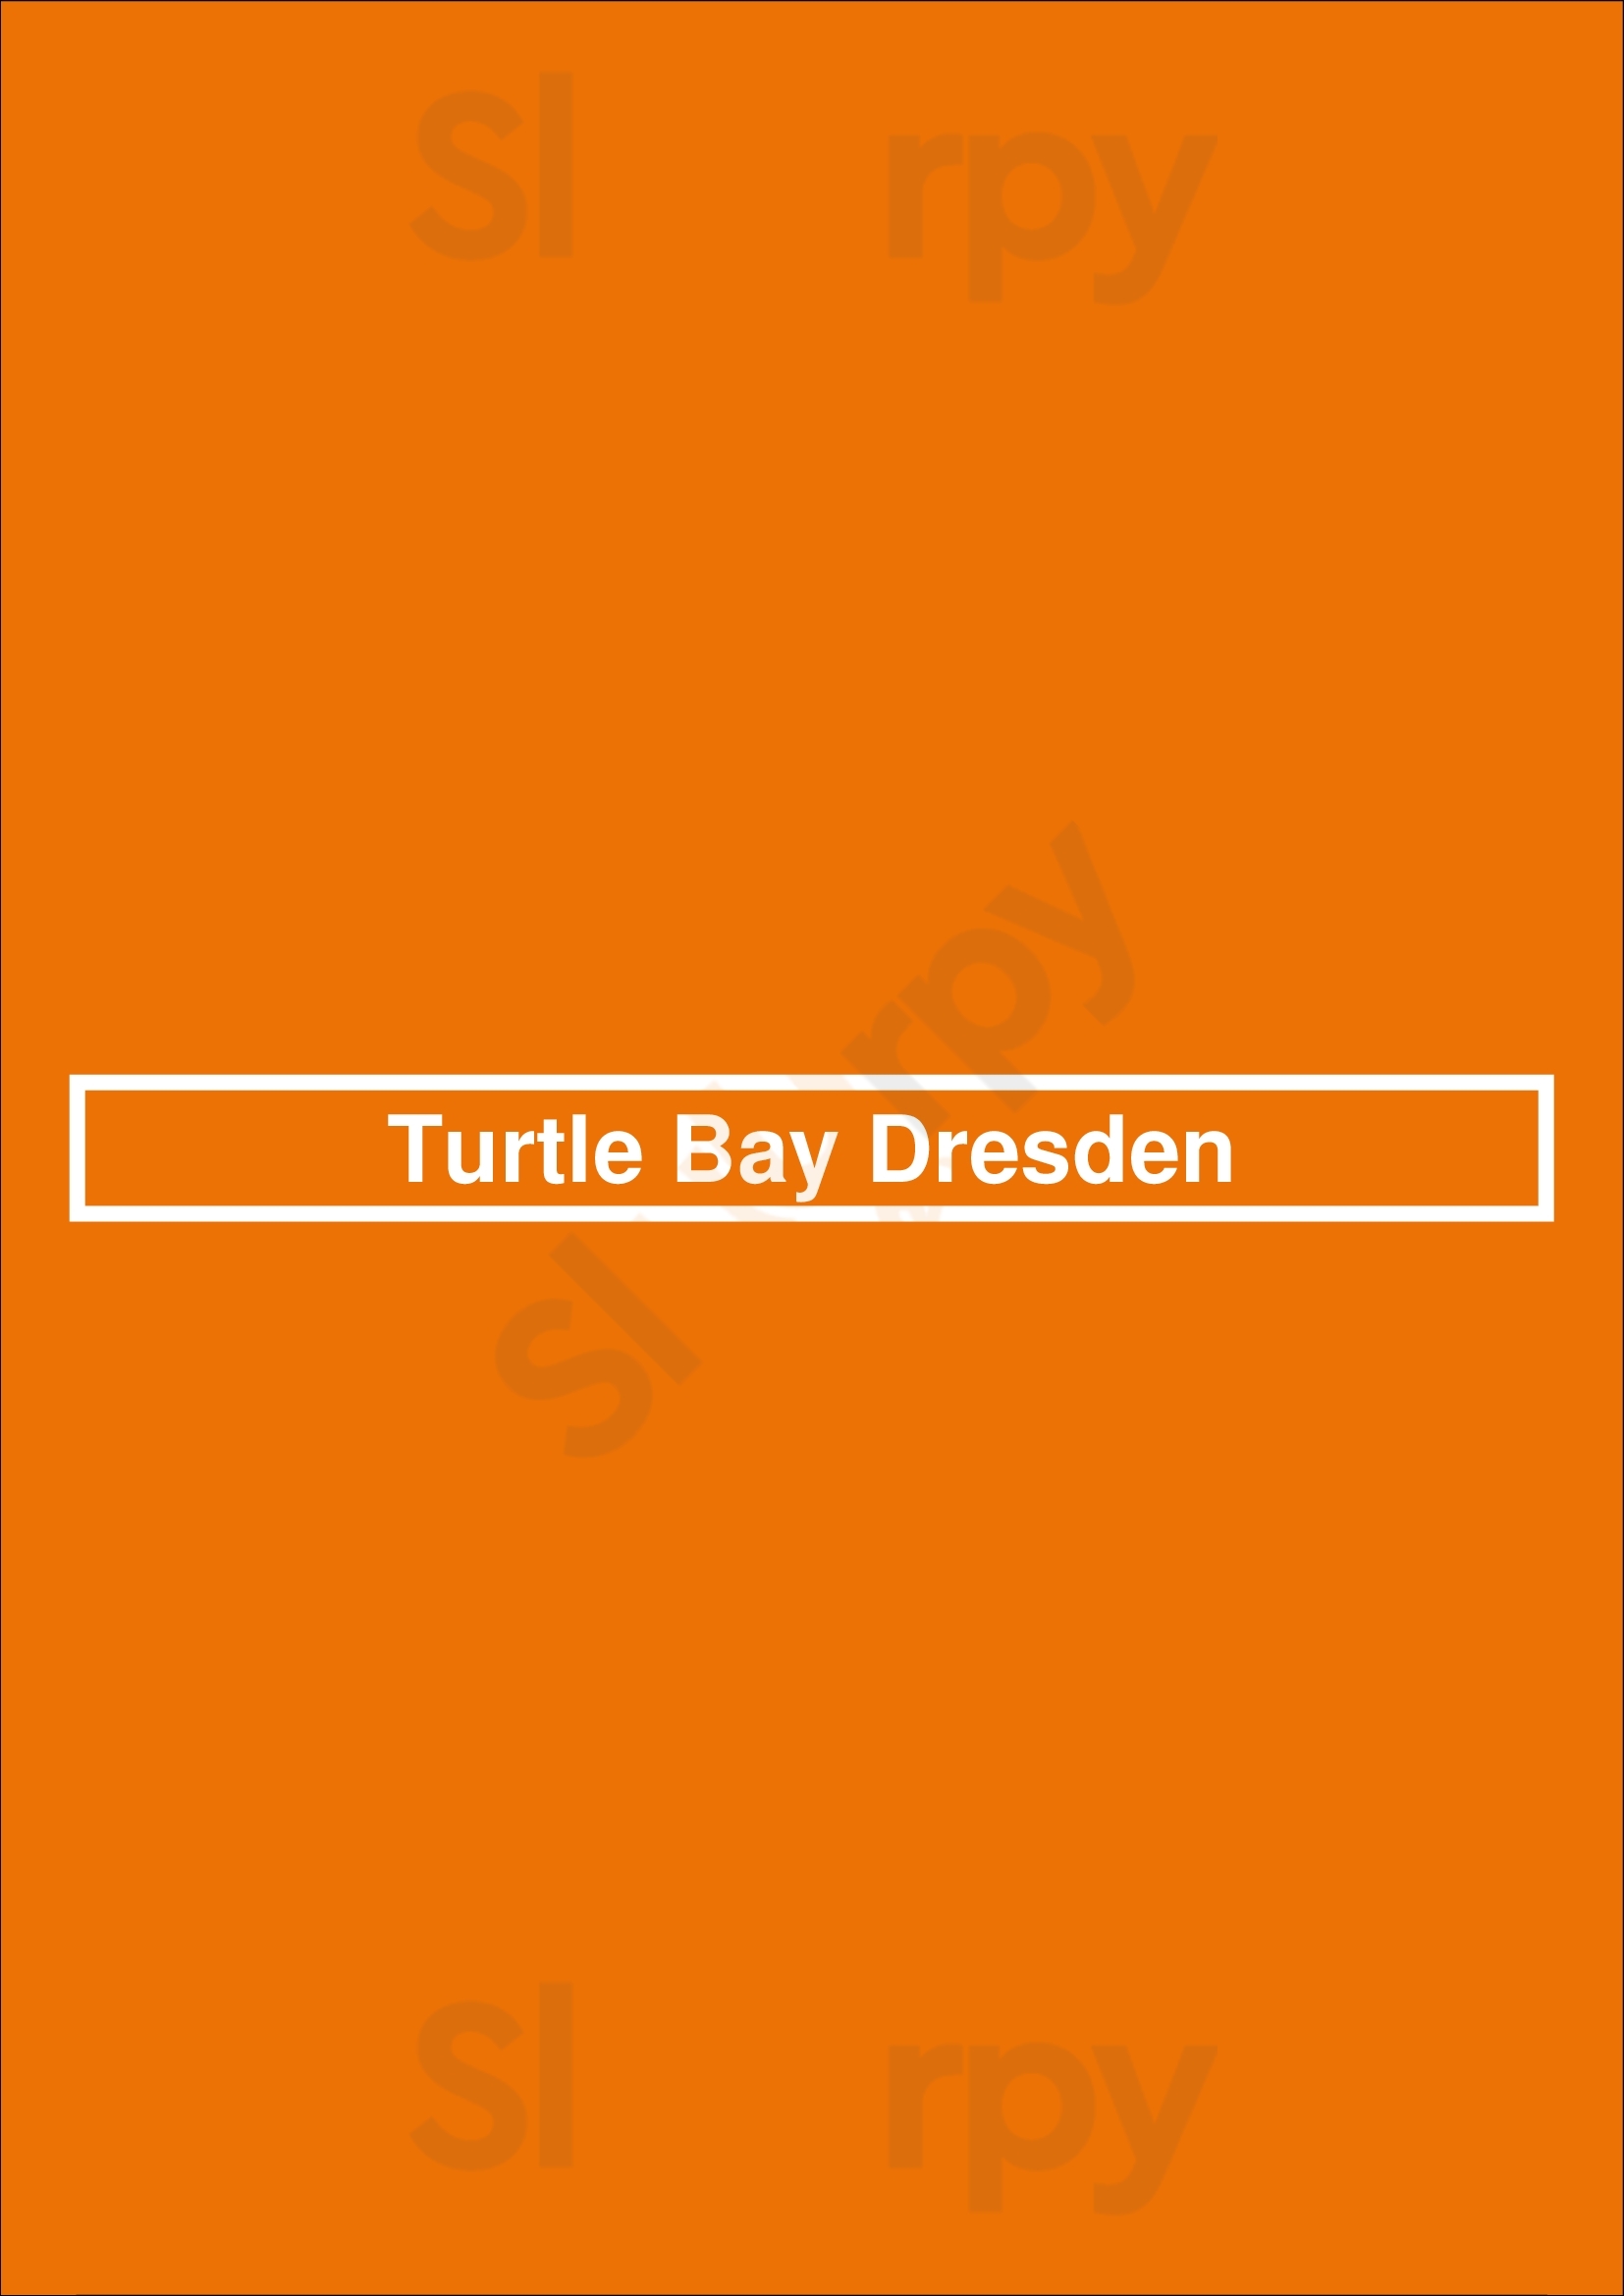 Turtle Bay Dresden Dresden Menu - 1